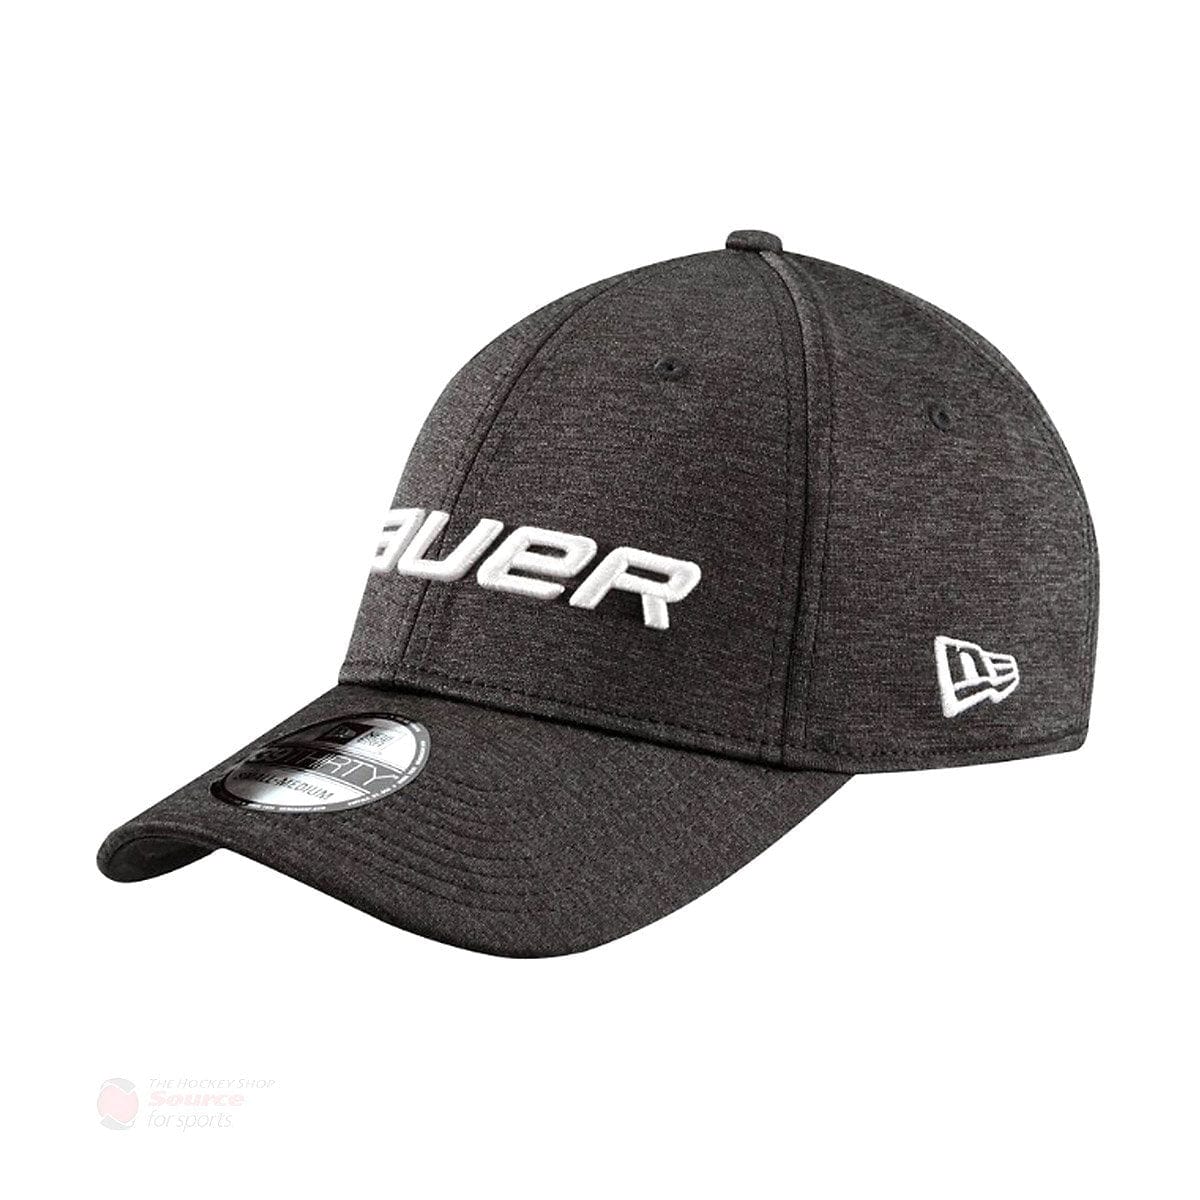 Bauer 39Thirty Youth Flexfit Hat